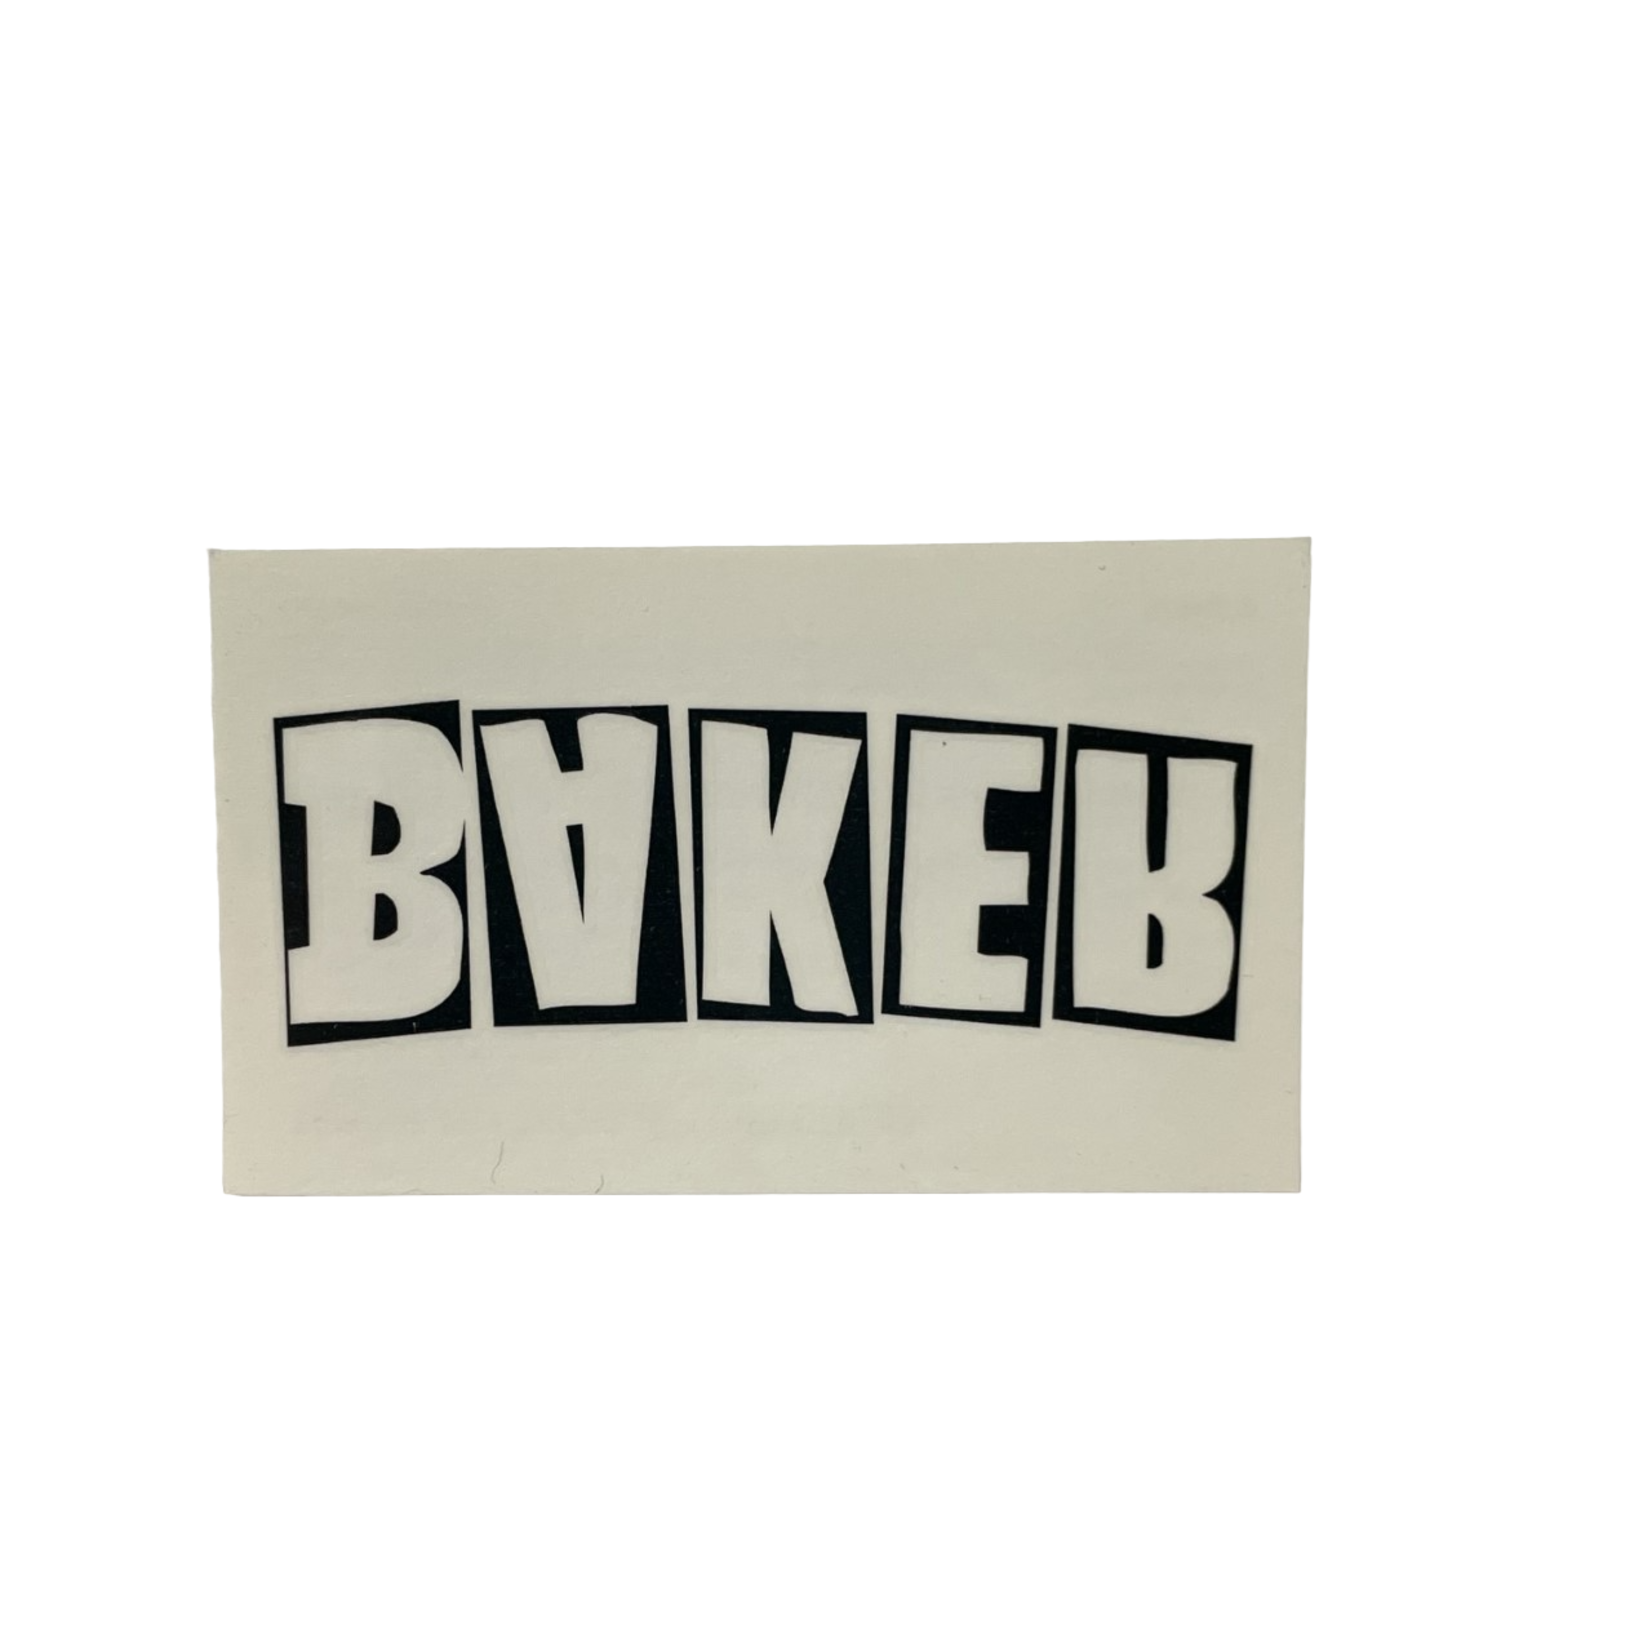 Baker Baker Skateboards Temporary Tattoo - 2.5" x 1.5" (Vintage)